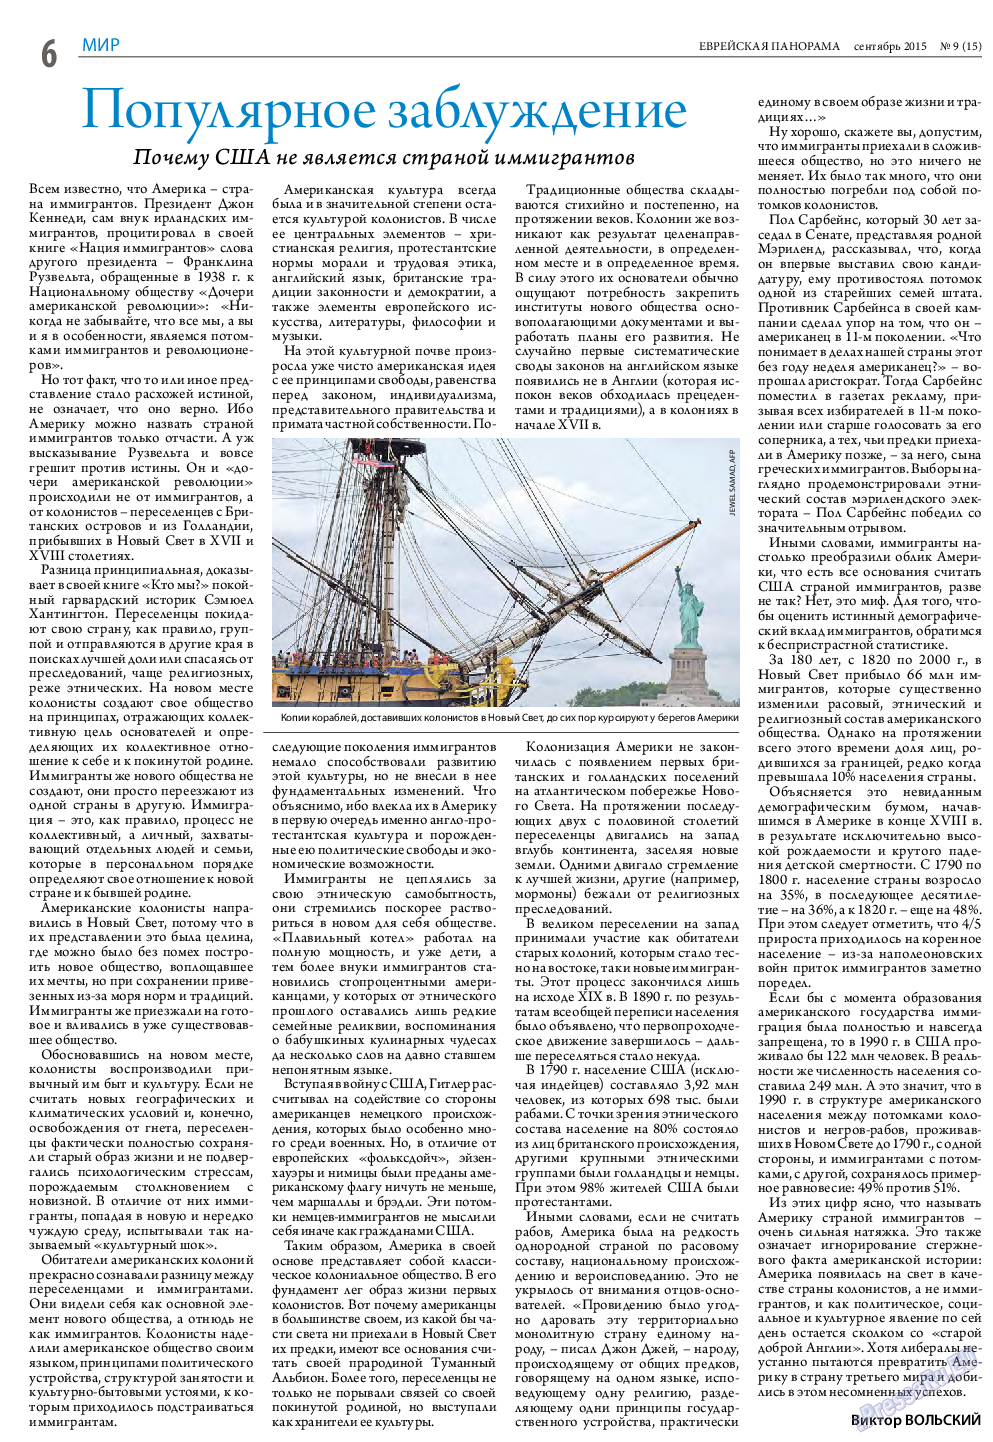 Еврейская панорама, газета. 2015 №9 стр.6